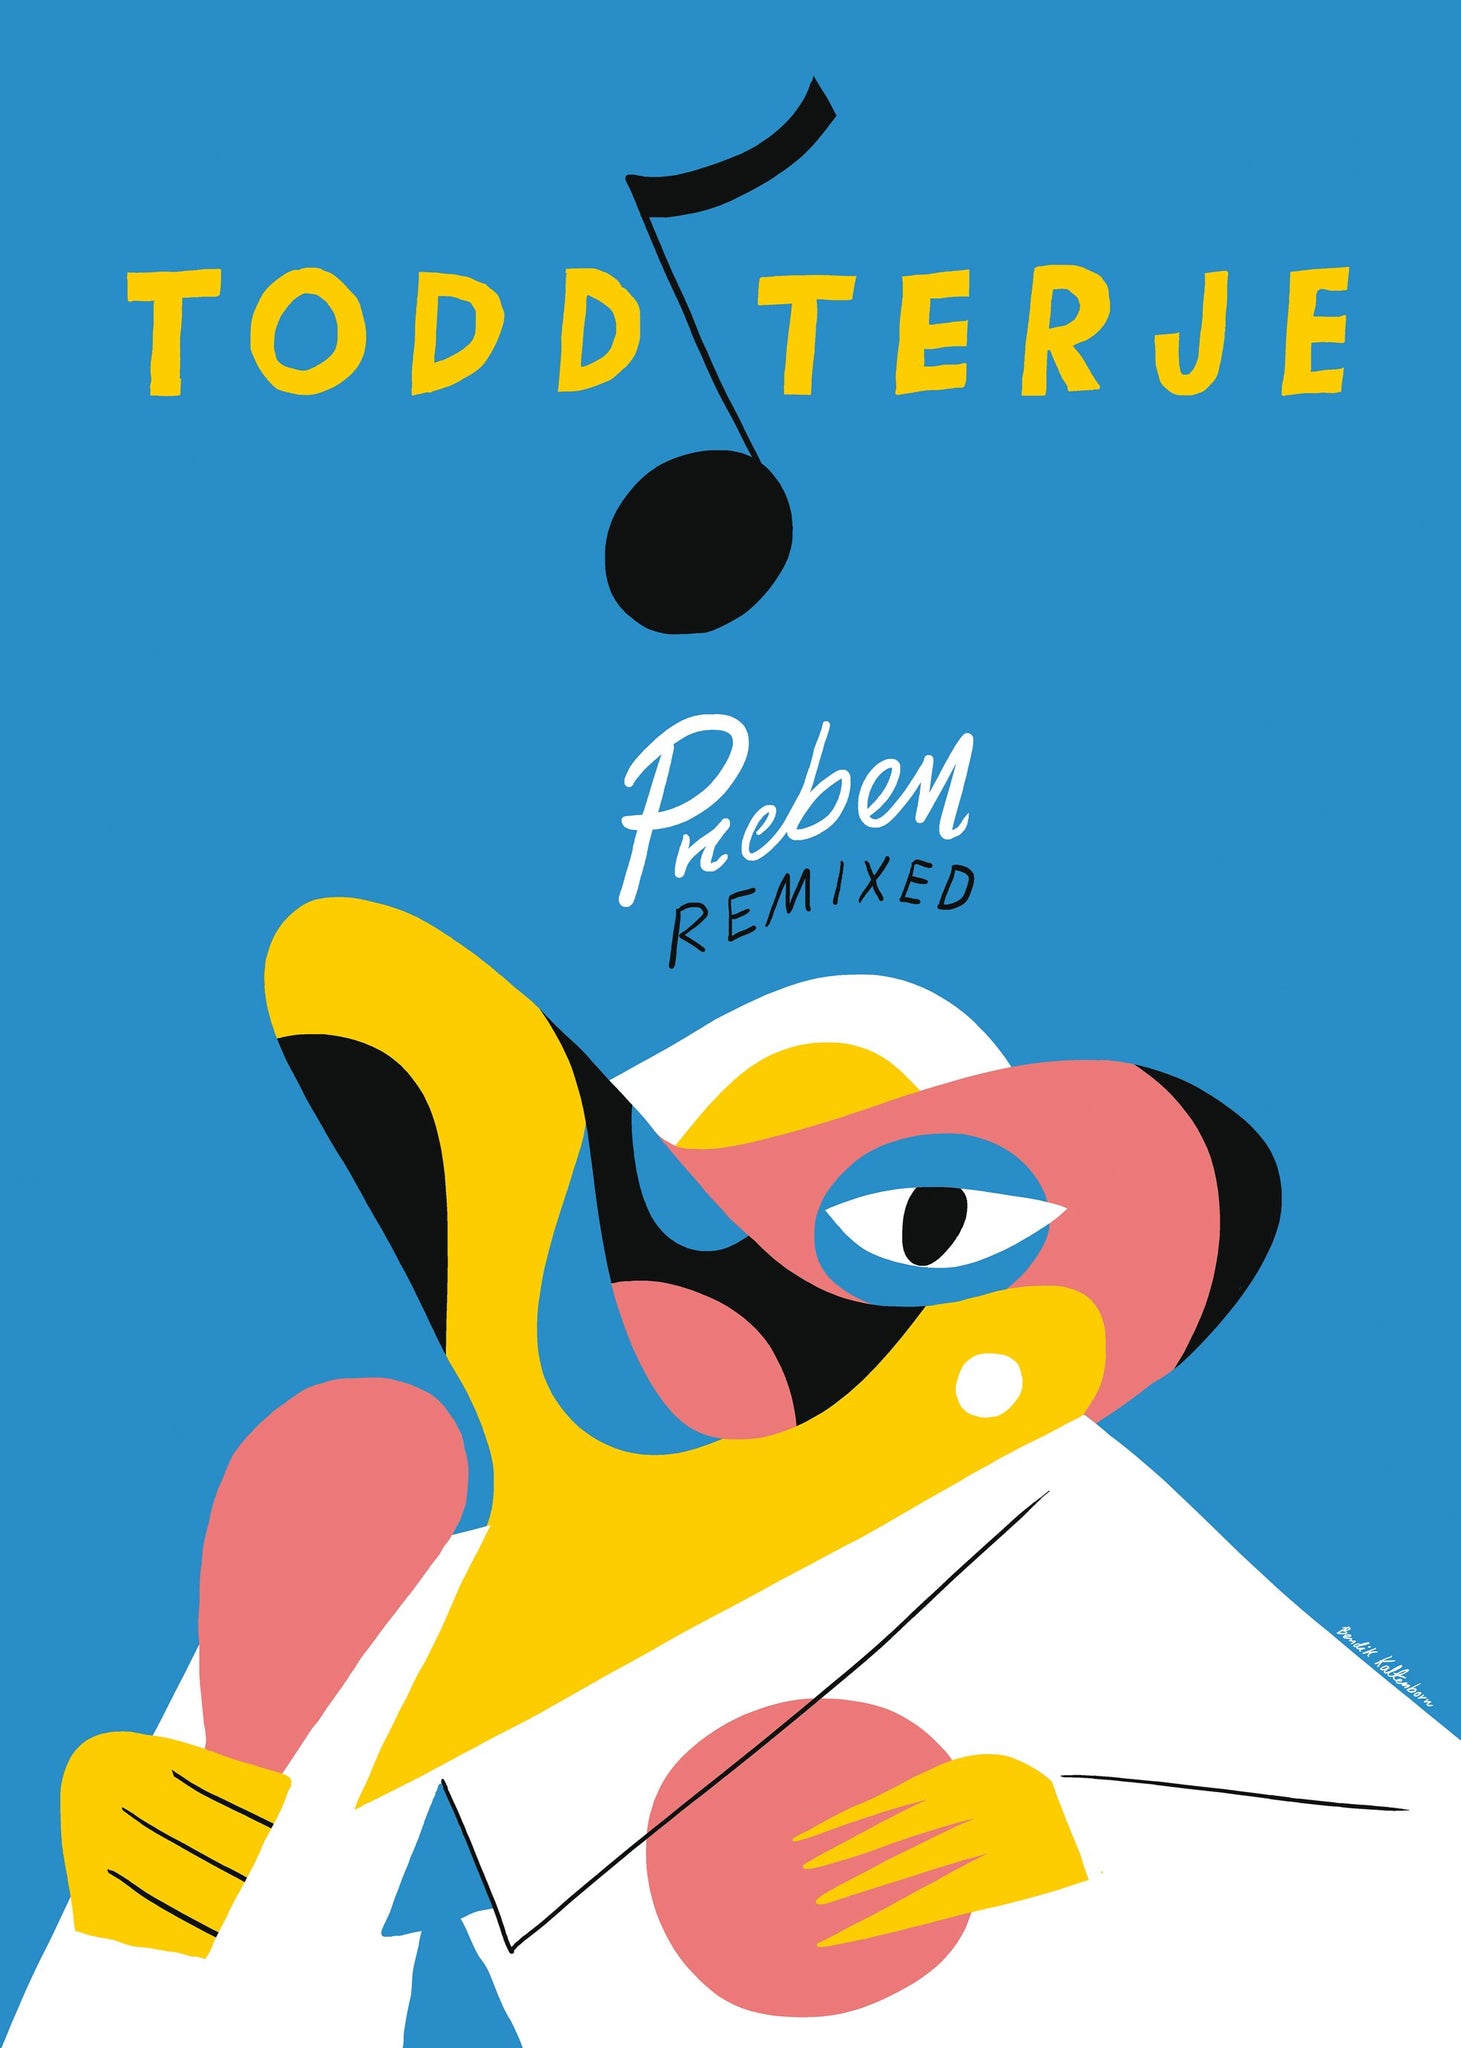 Bendik Kaltenborn: Todd Terje, Preben, Remixed. Signed Poster